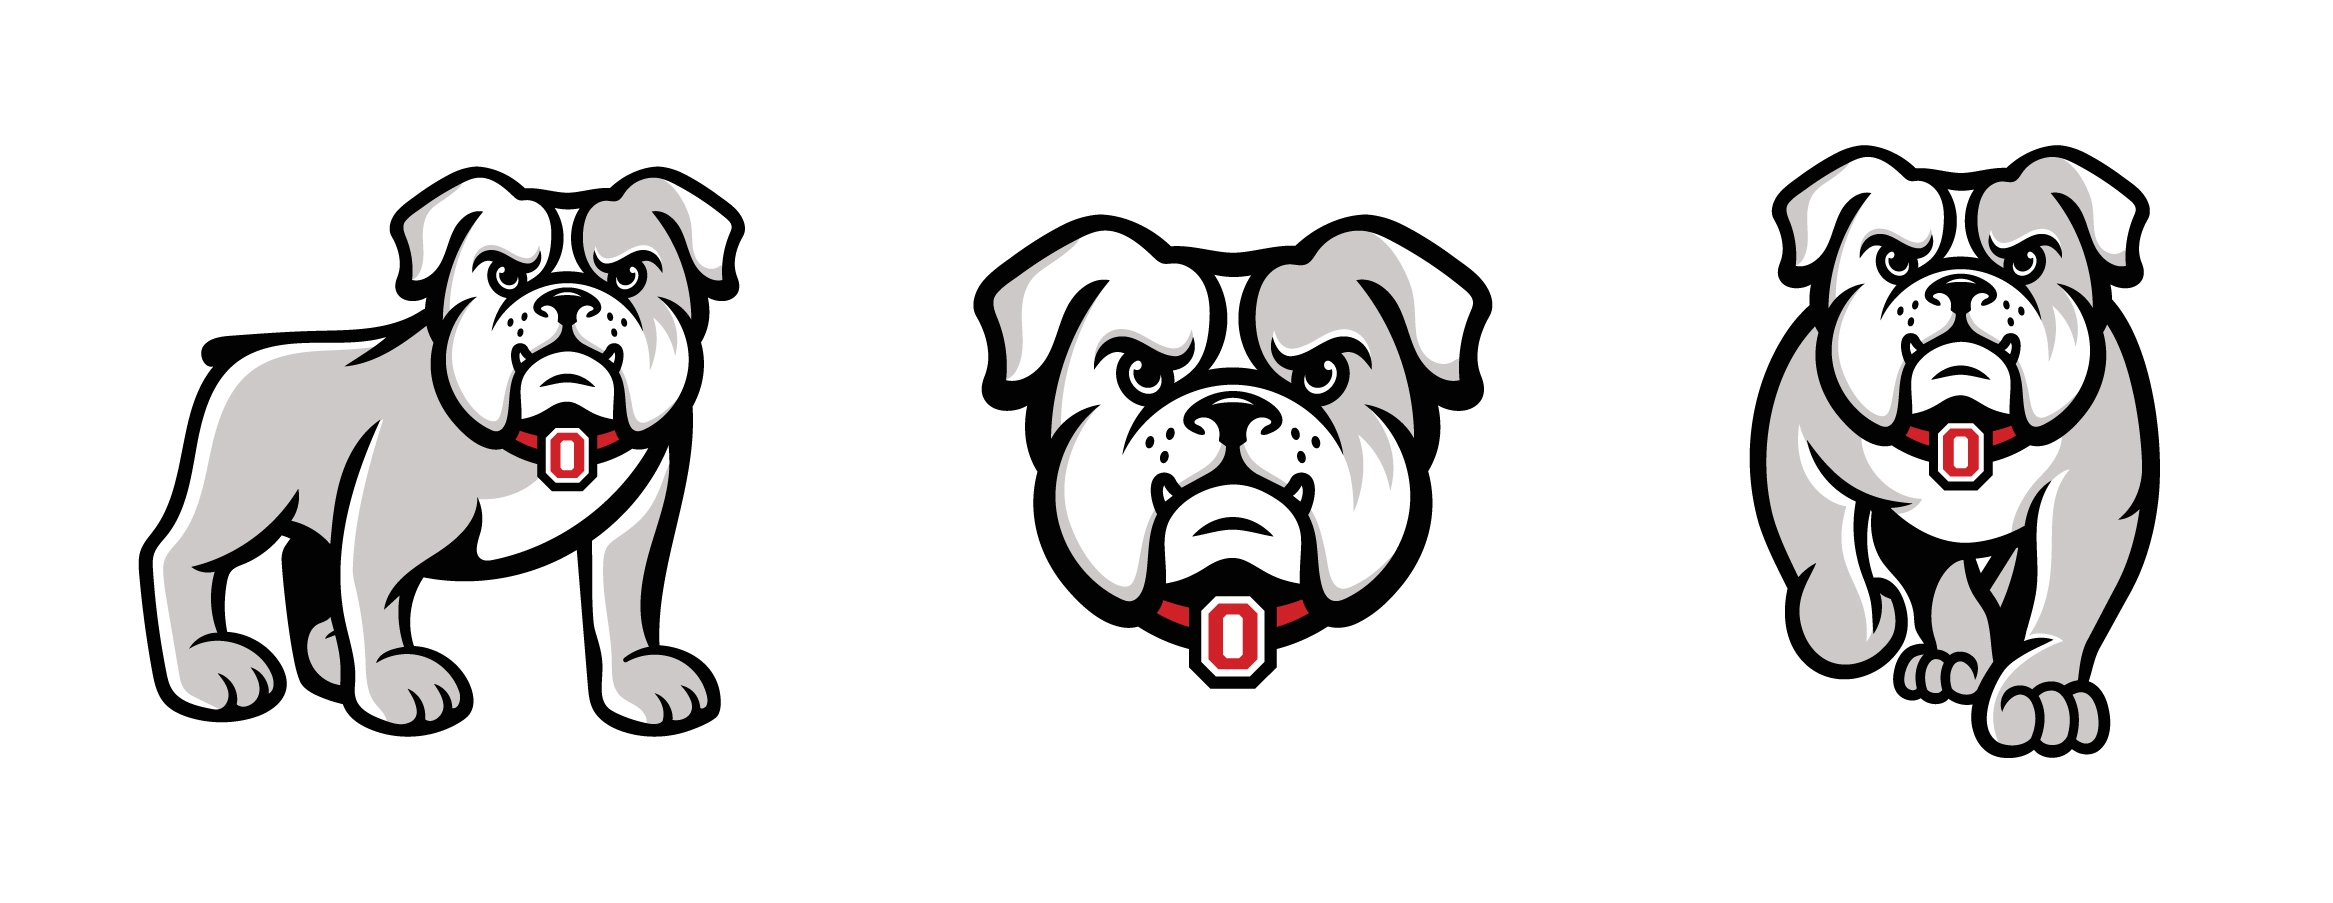 Opelika High School Bulldogs Alabama new logo branding